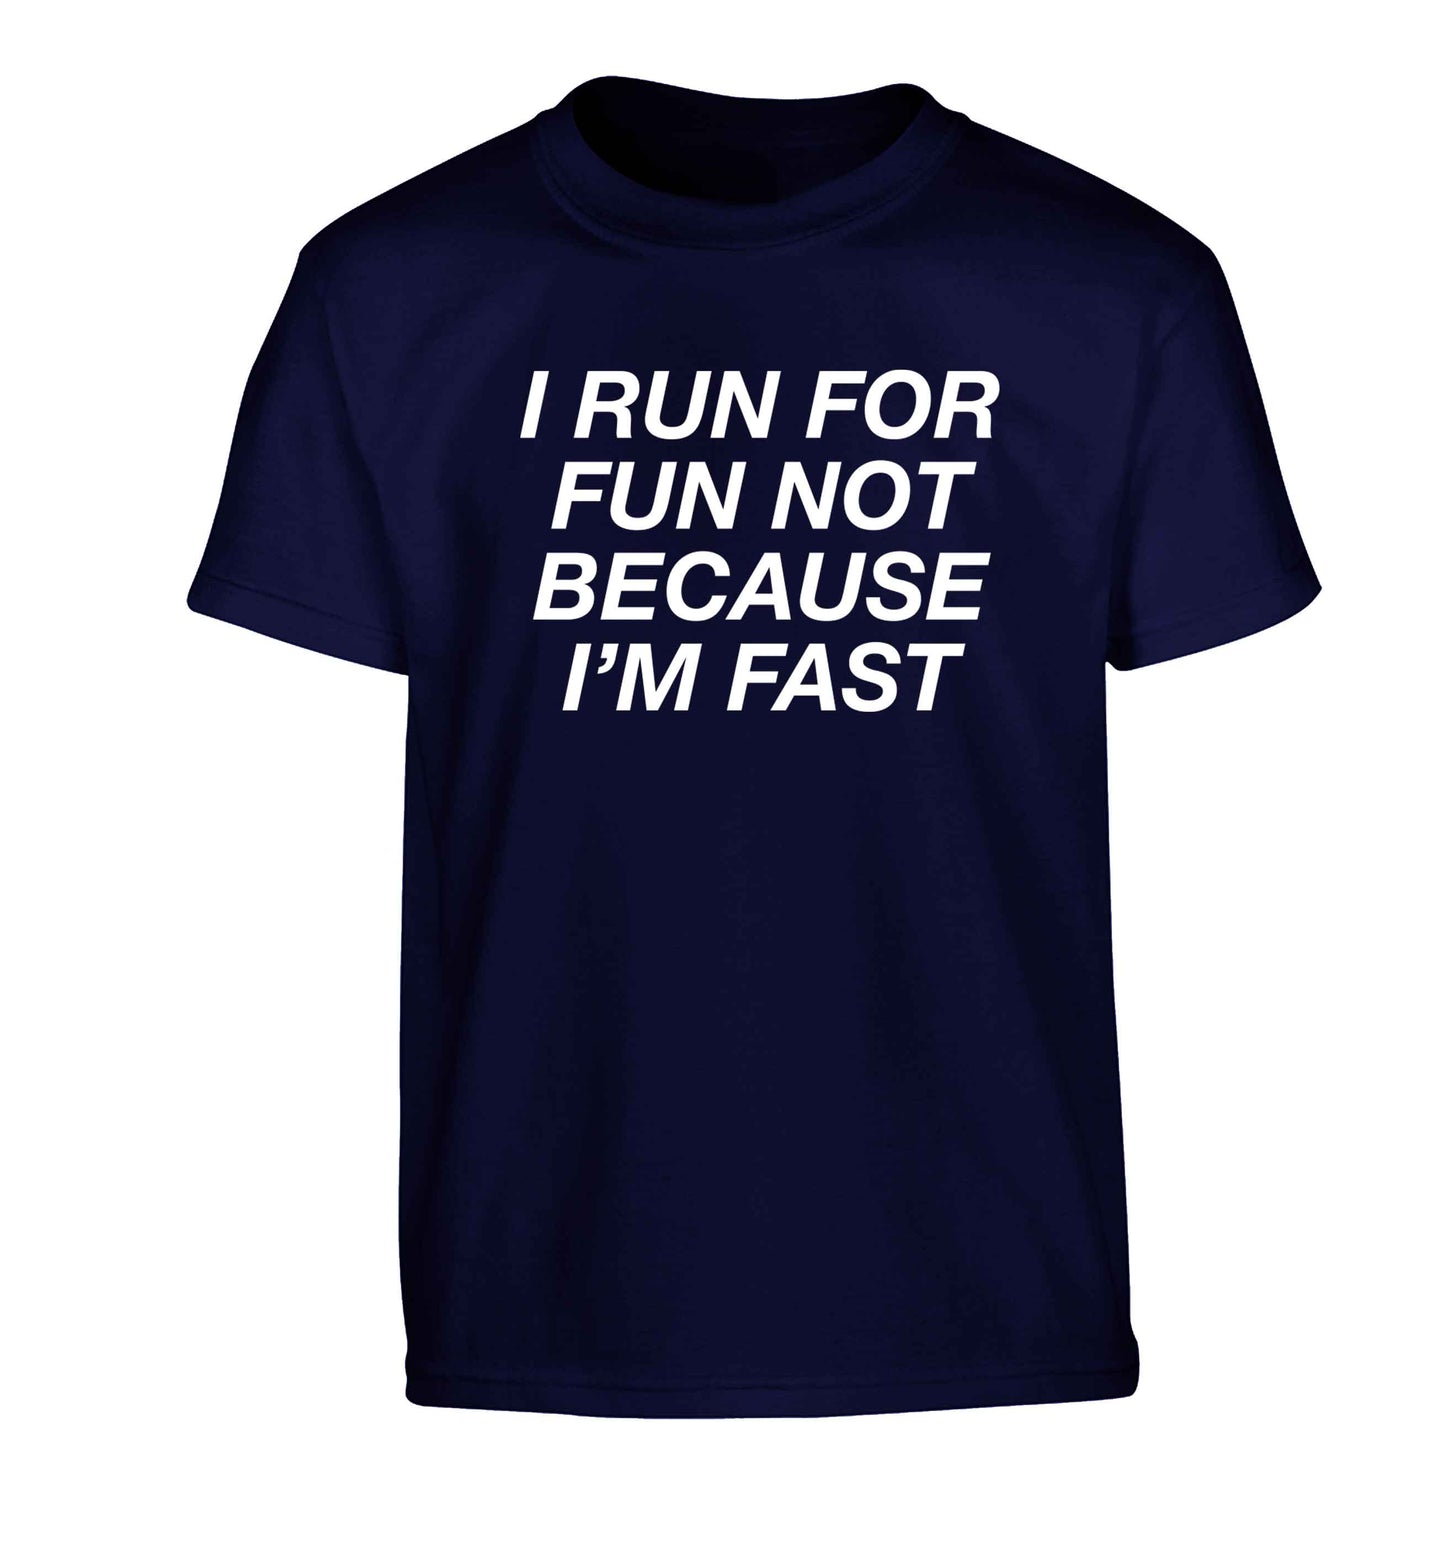 I run for fun not because I'm fast Children's navy Tshirt 12-13 Years